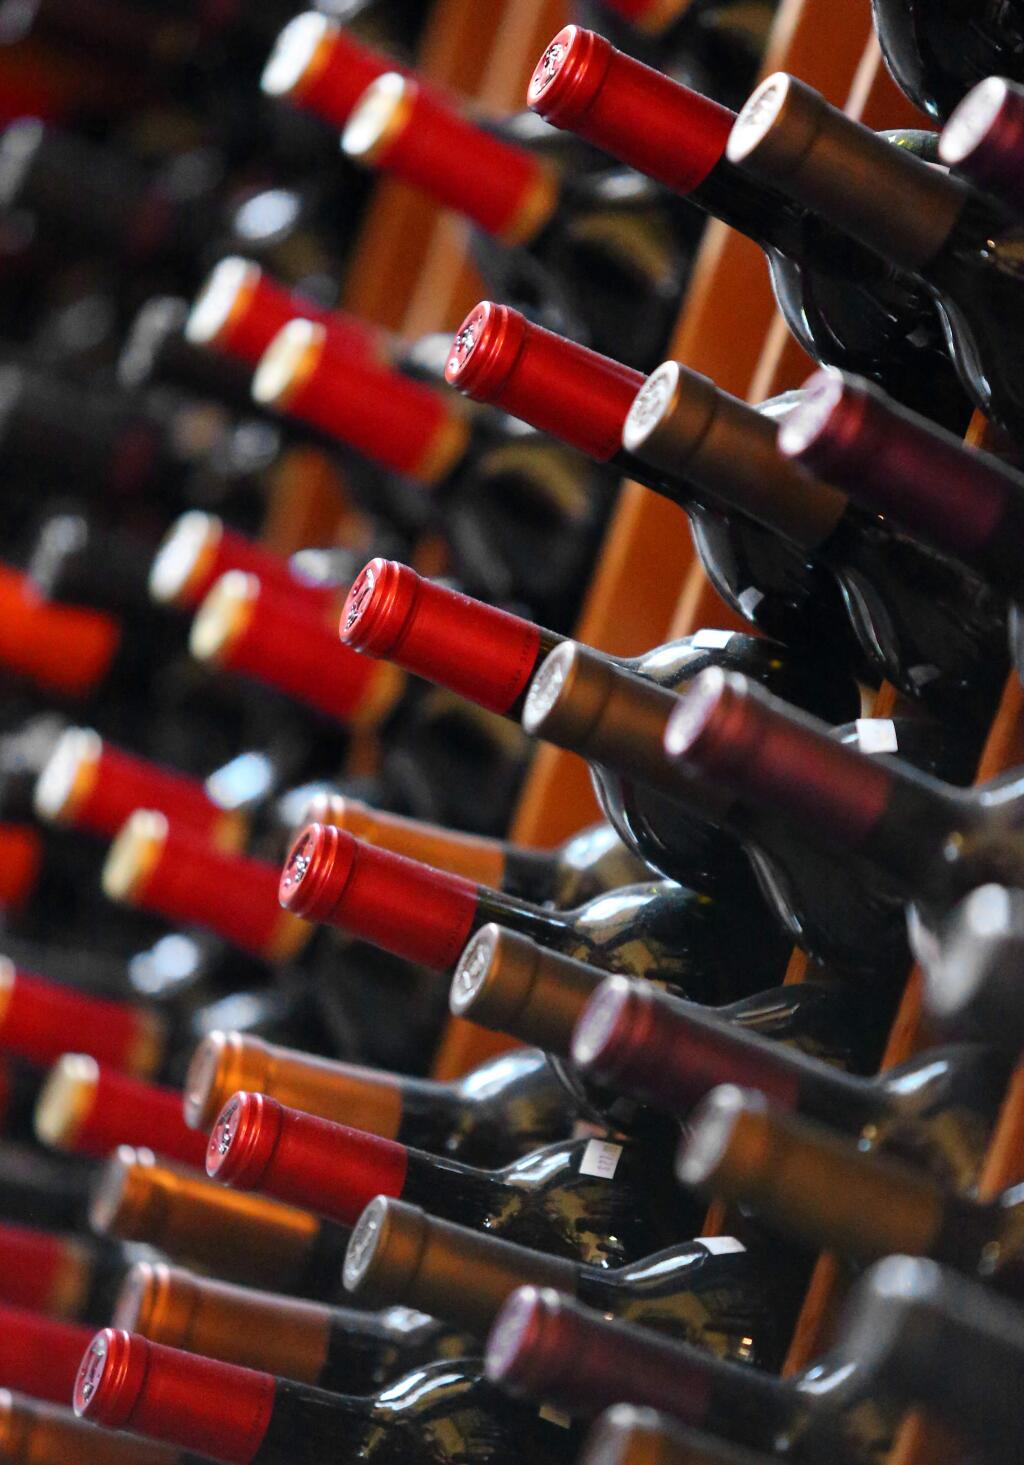 Racks of wine bottles for sale at Bottle Barn in Santa Rosa on Wednesday, January 28, 2015. (Christopher Chung/ The Press Democrat)